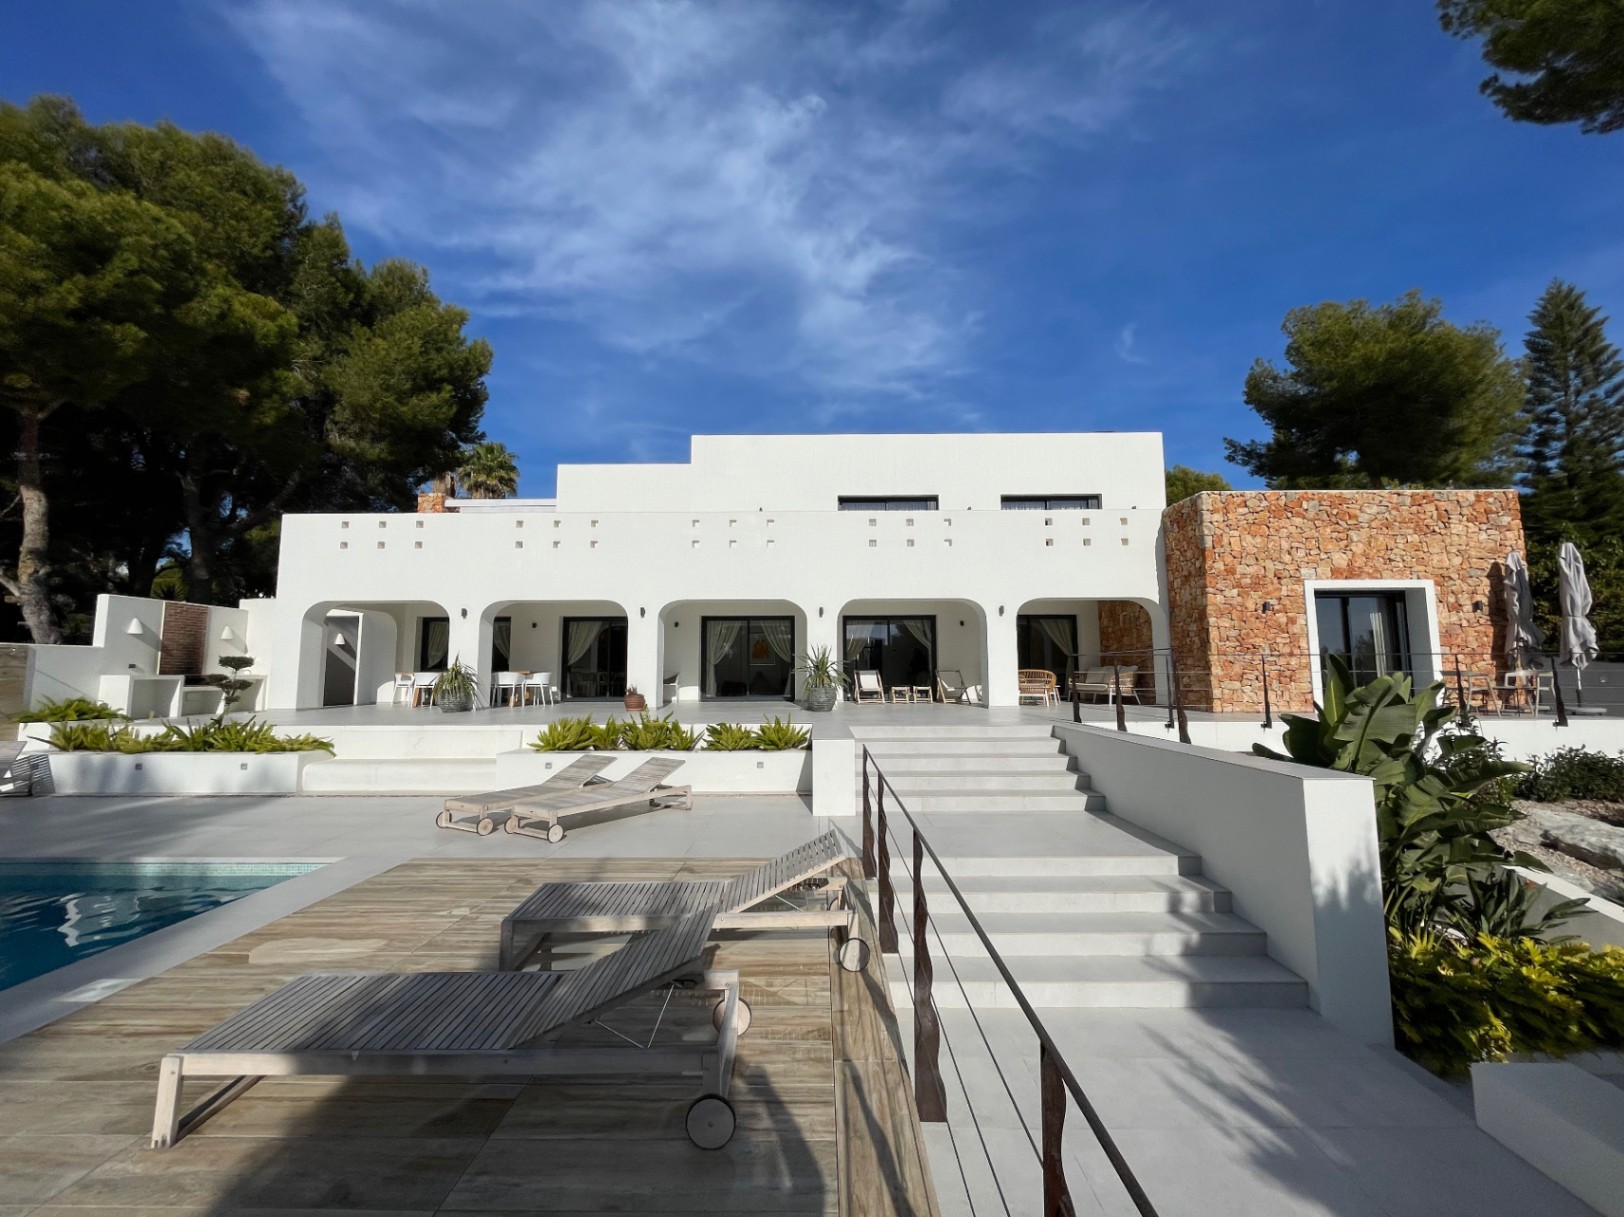 Luxury ibiza style villa with sea views in San jaime Moraira